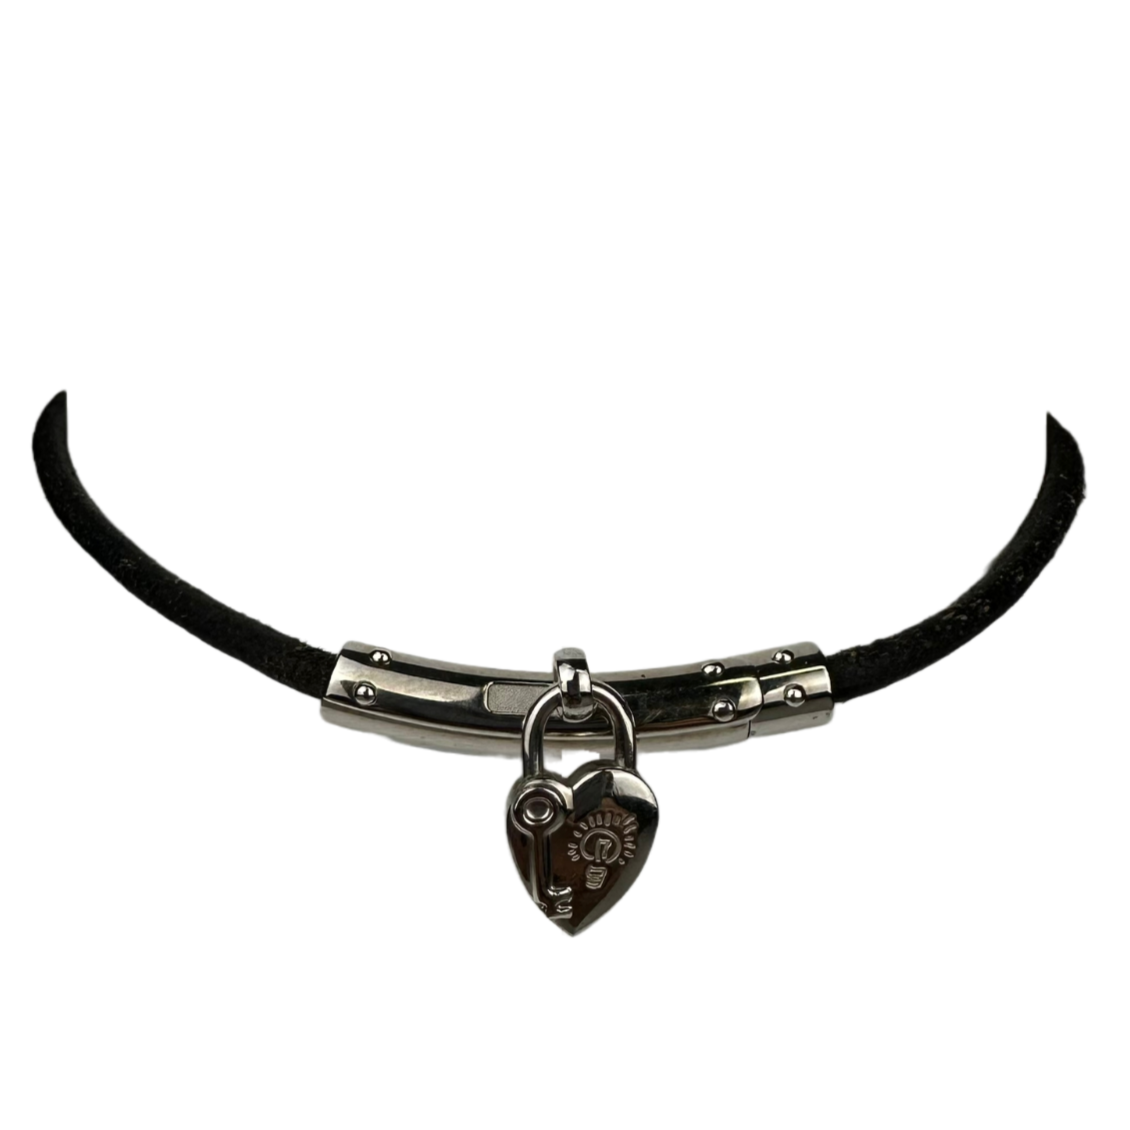 Hermes Viviride Choker Necklace Heart Cadena Motif